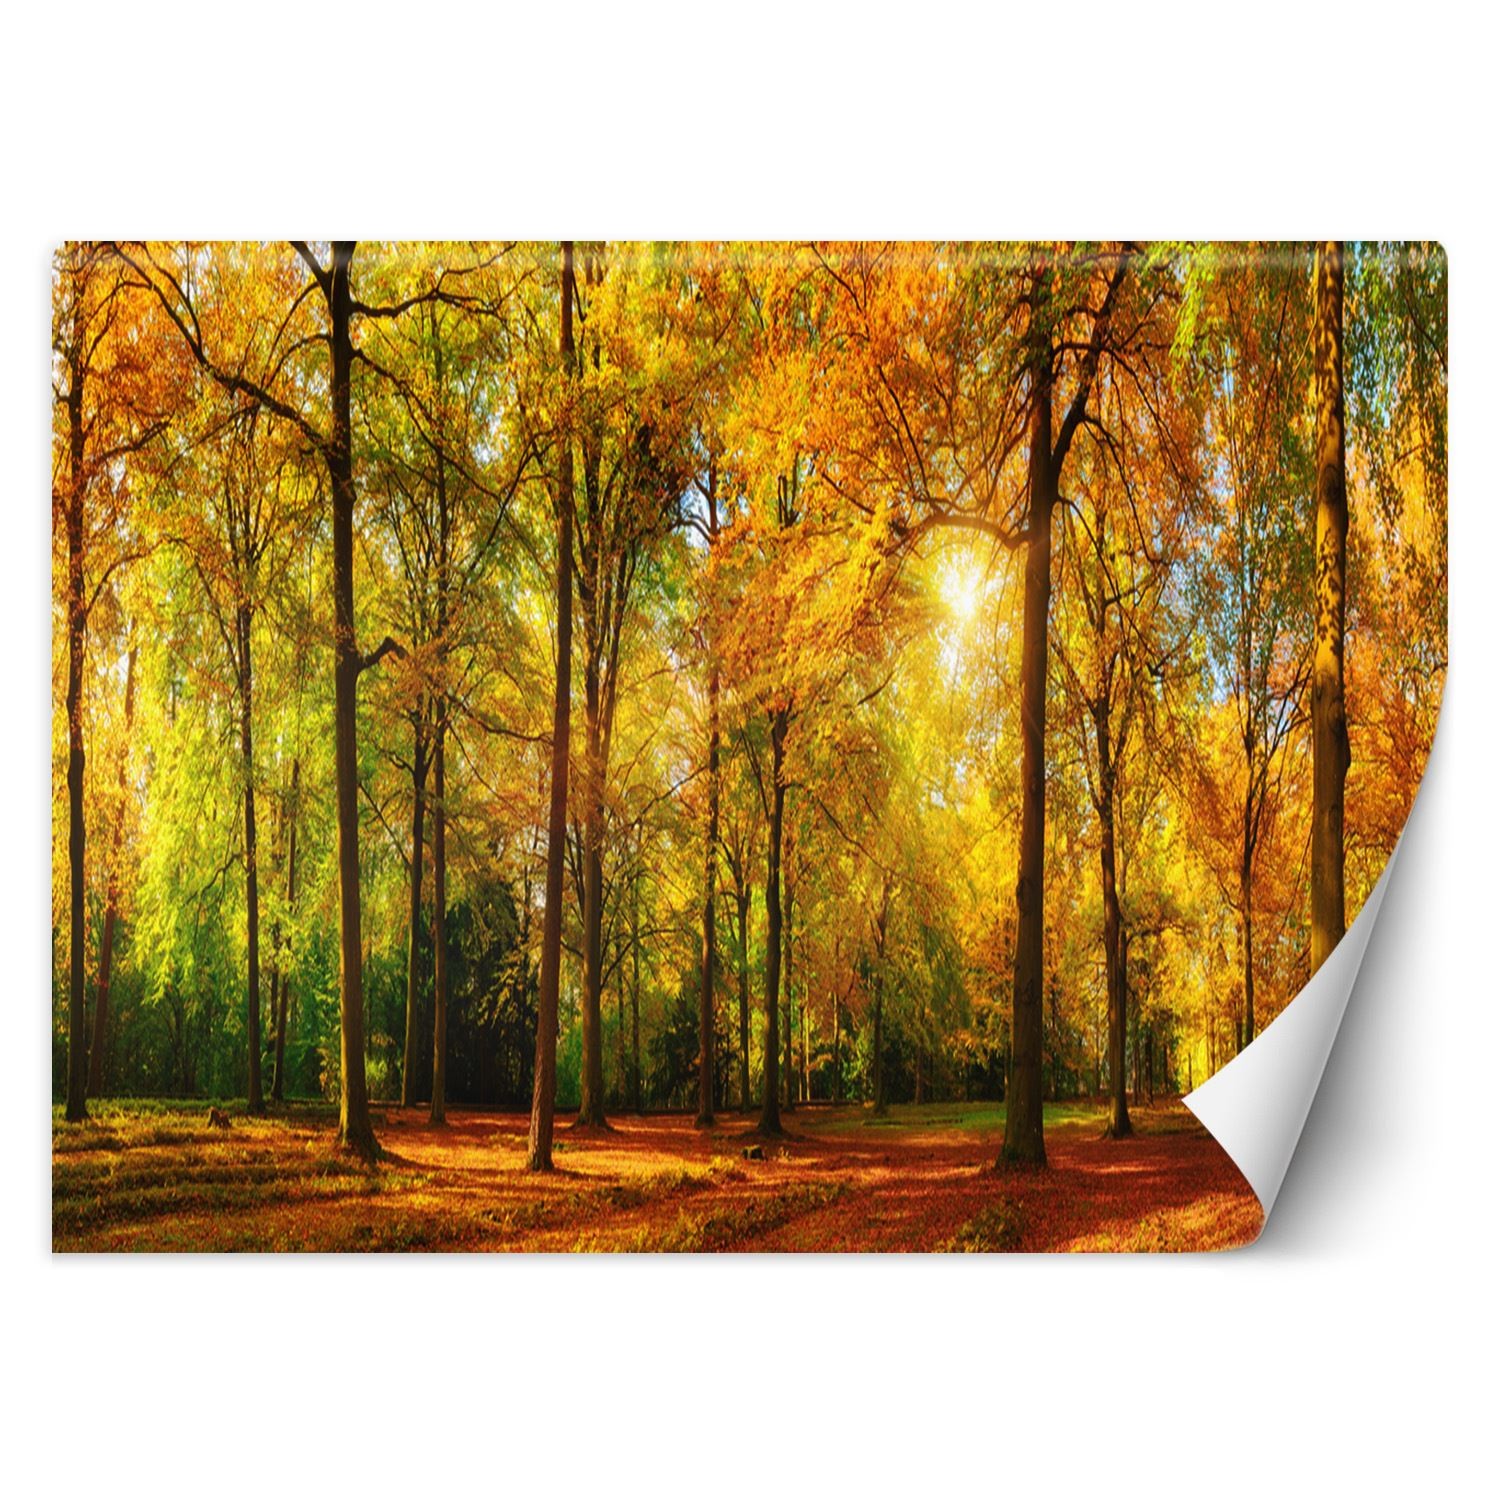 Trend24 – Behang – Herfstbos – Vliesbehang – Fotobehang Natuur – Behang Woonkamer – 450×315 cm – Incl. behanglijm